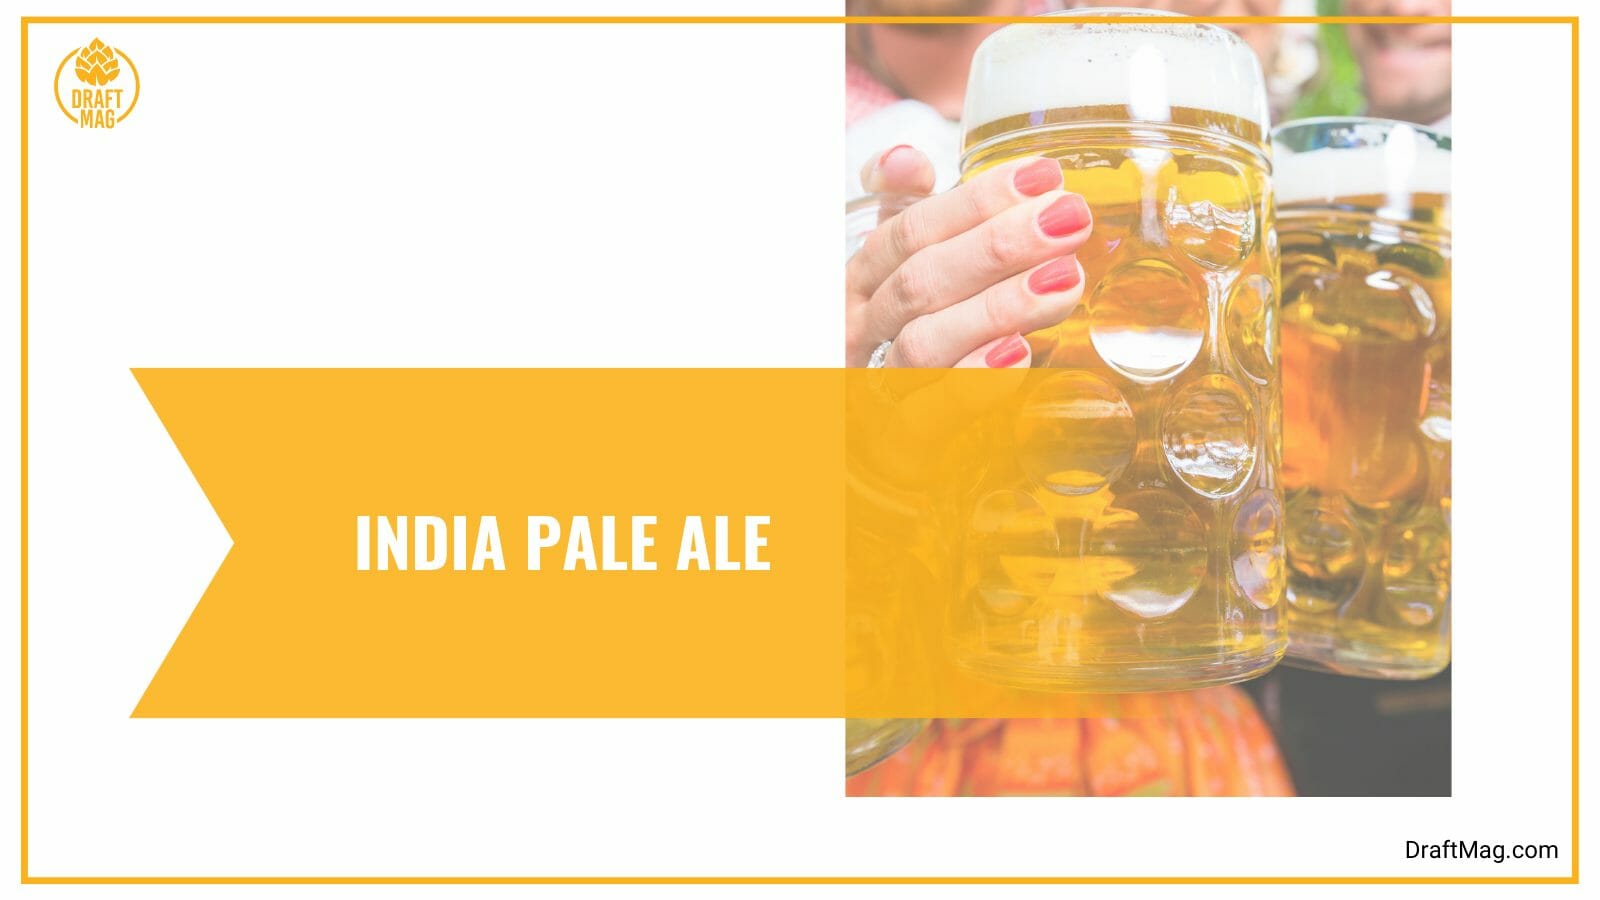 India pale ale a popular brew